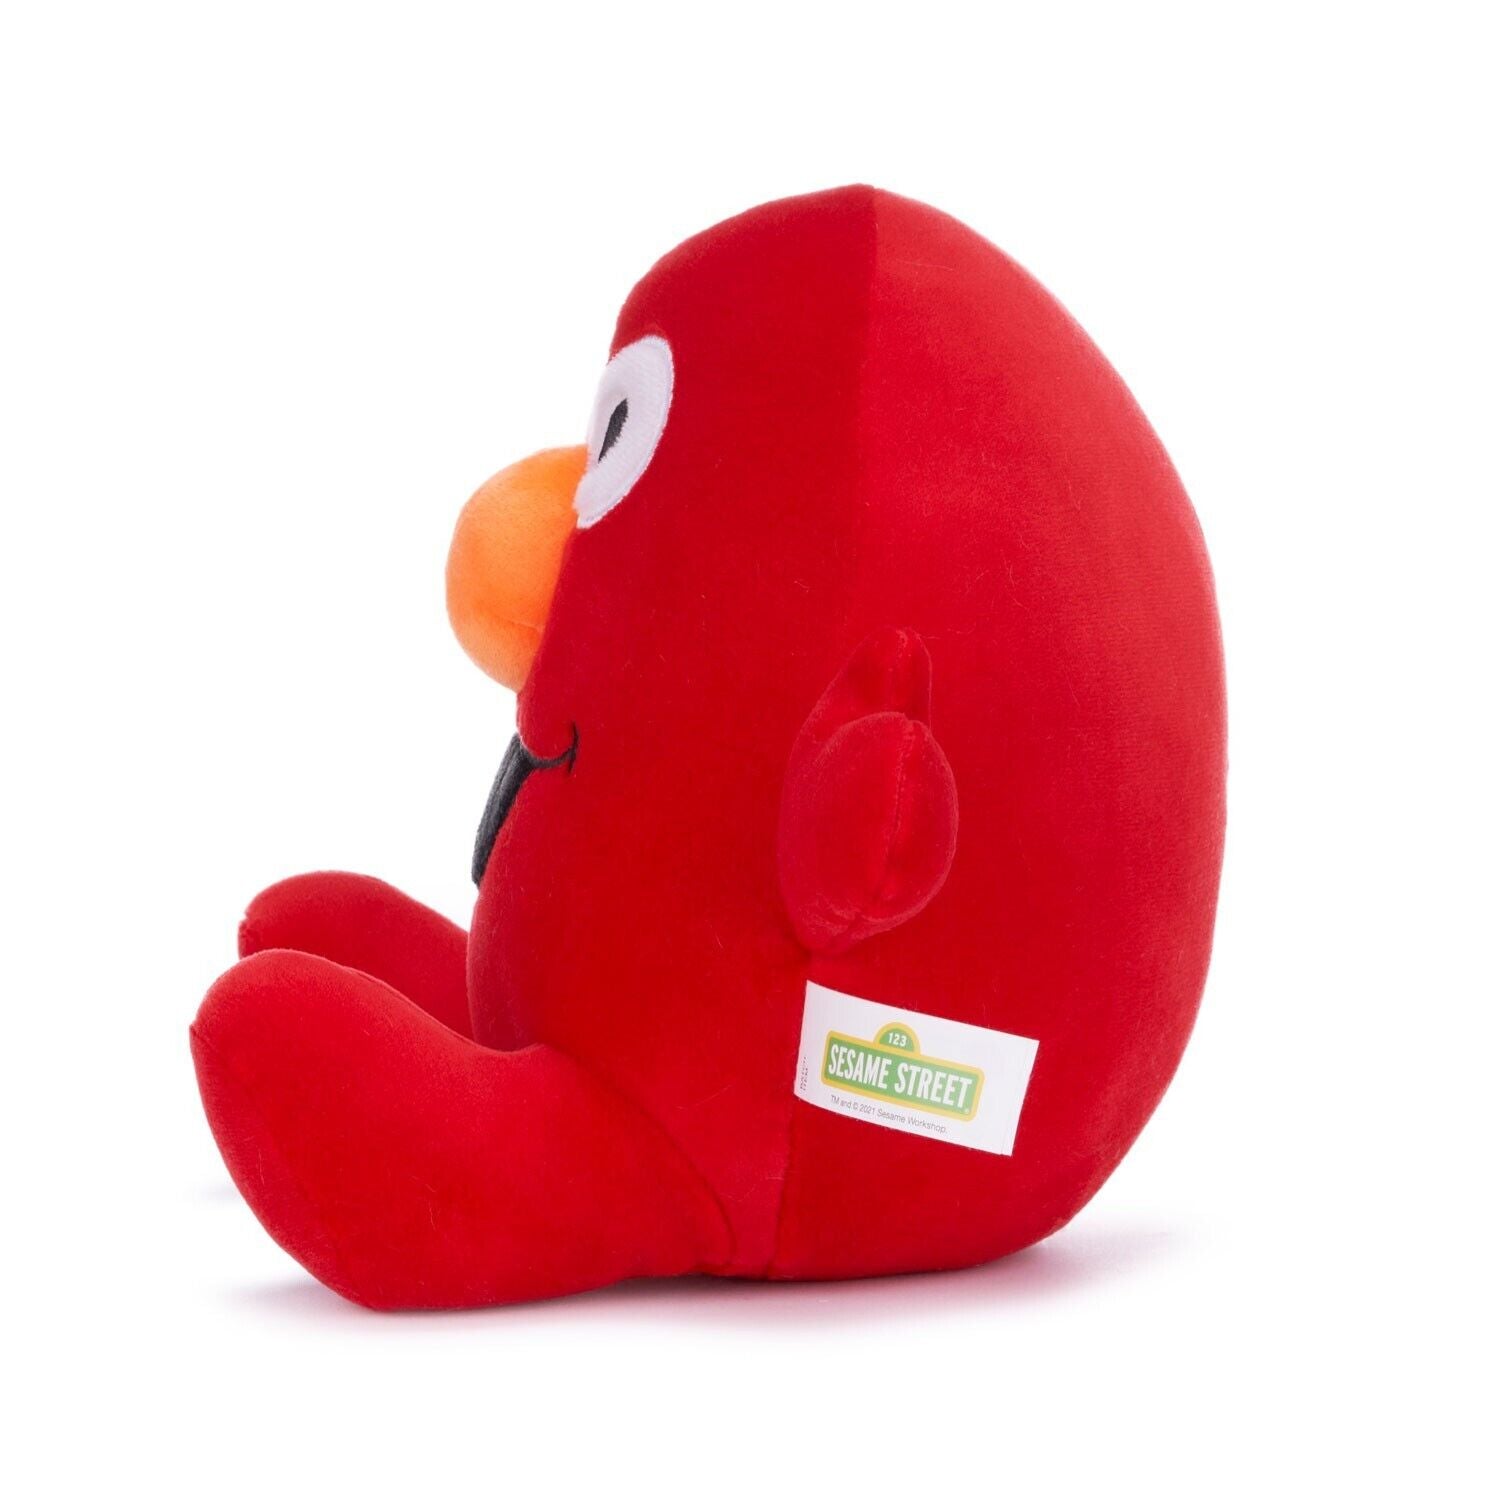 "New Sesame Street Squashy Podgies 8" Plush Elmo - Adorable and Soft!"